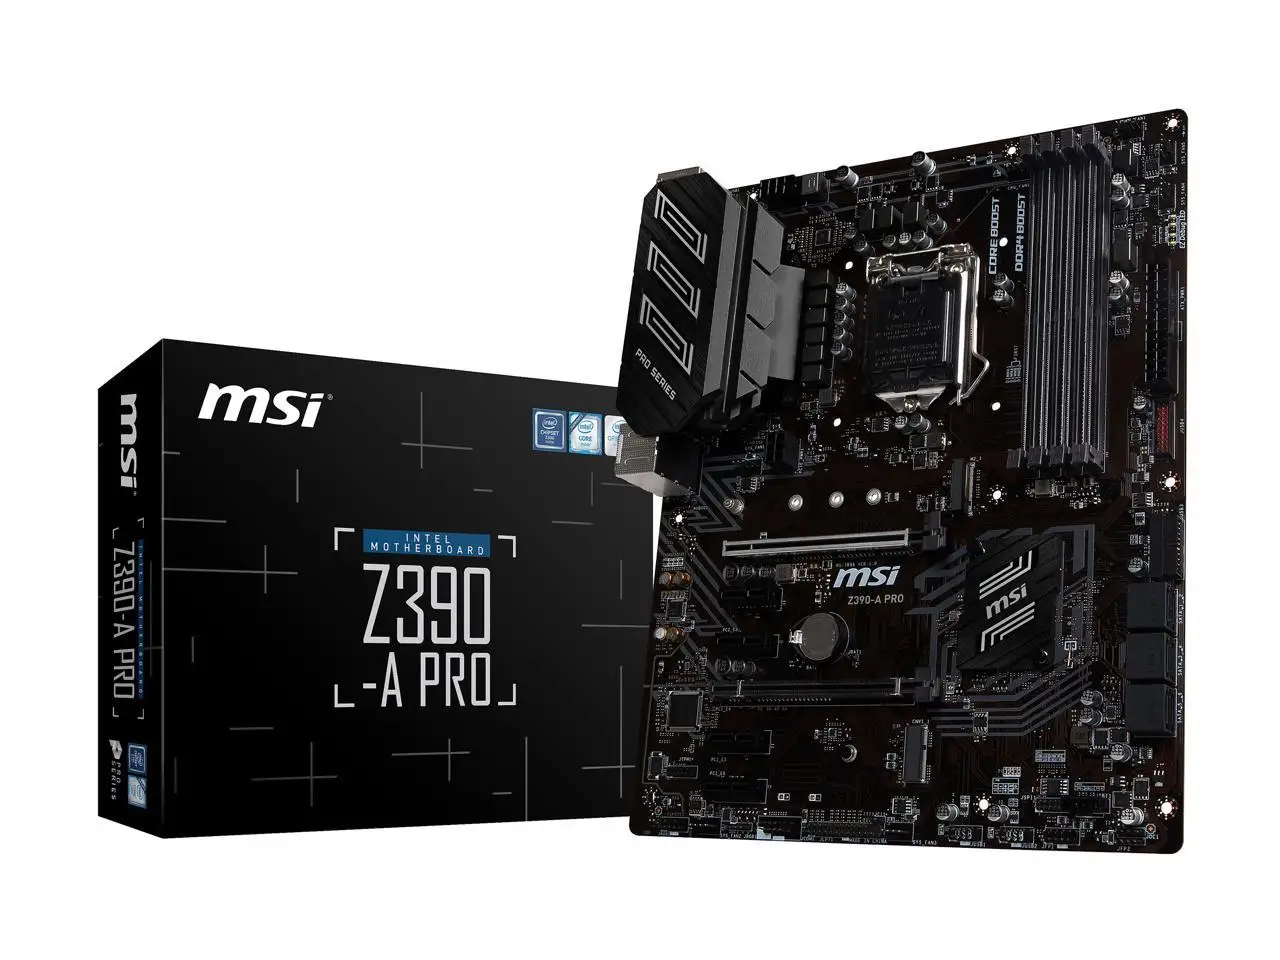 

For MSI PRO Z390-A PRO LGA 1151 (300 Series) Intel Z390 SATA 6Gb/s ATX Intel Motherboard